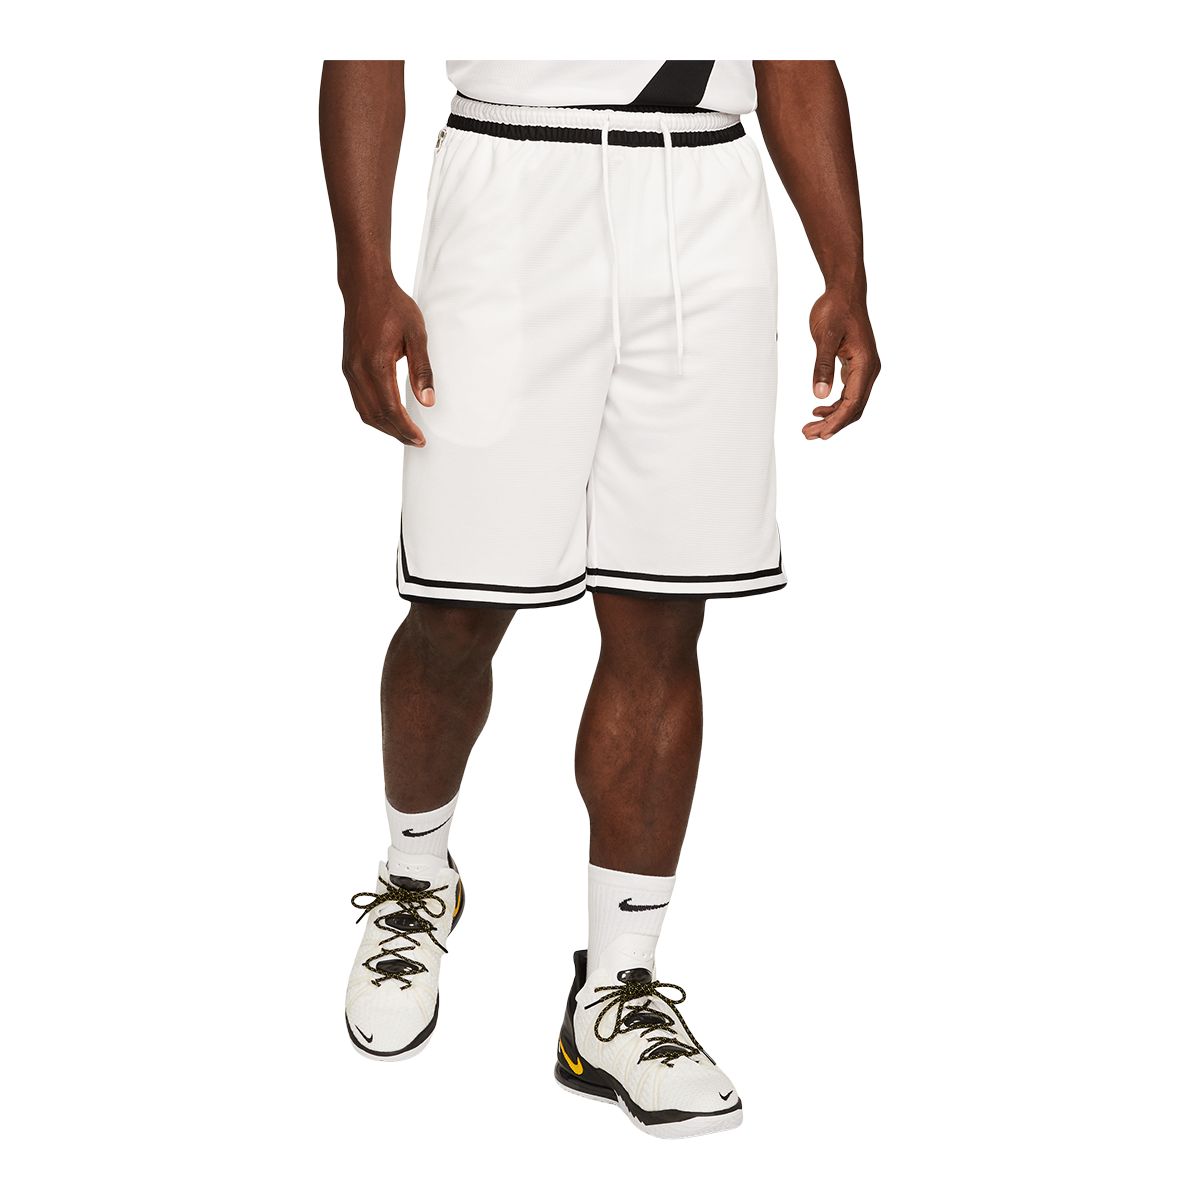 Nike Men's Basketball DNA Shorts